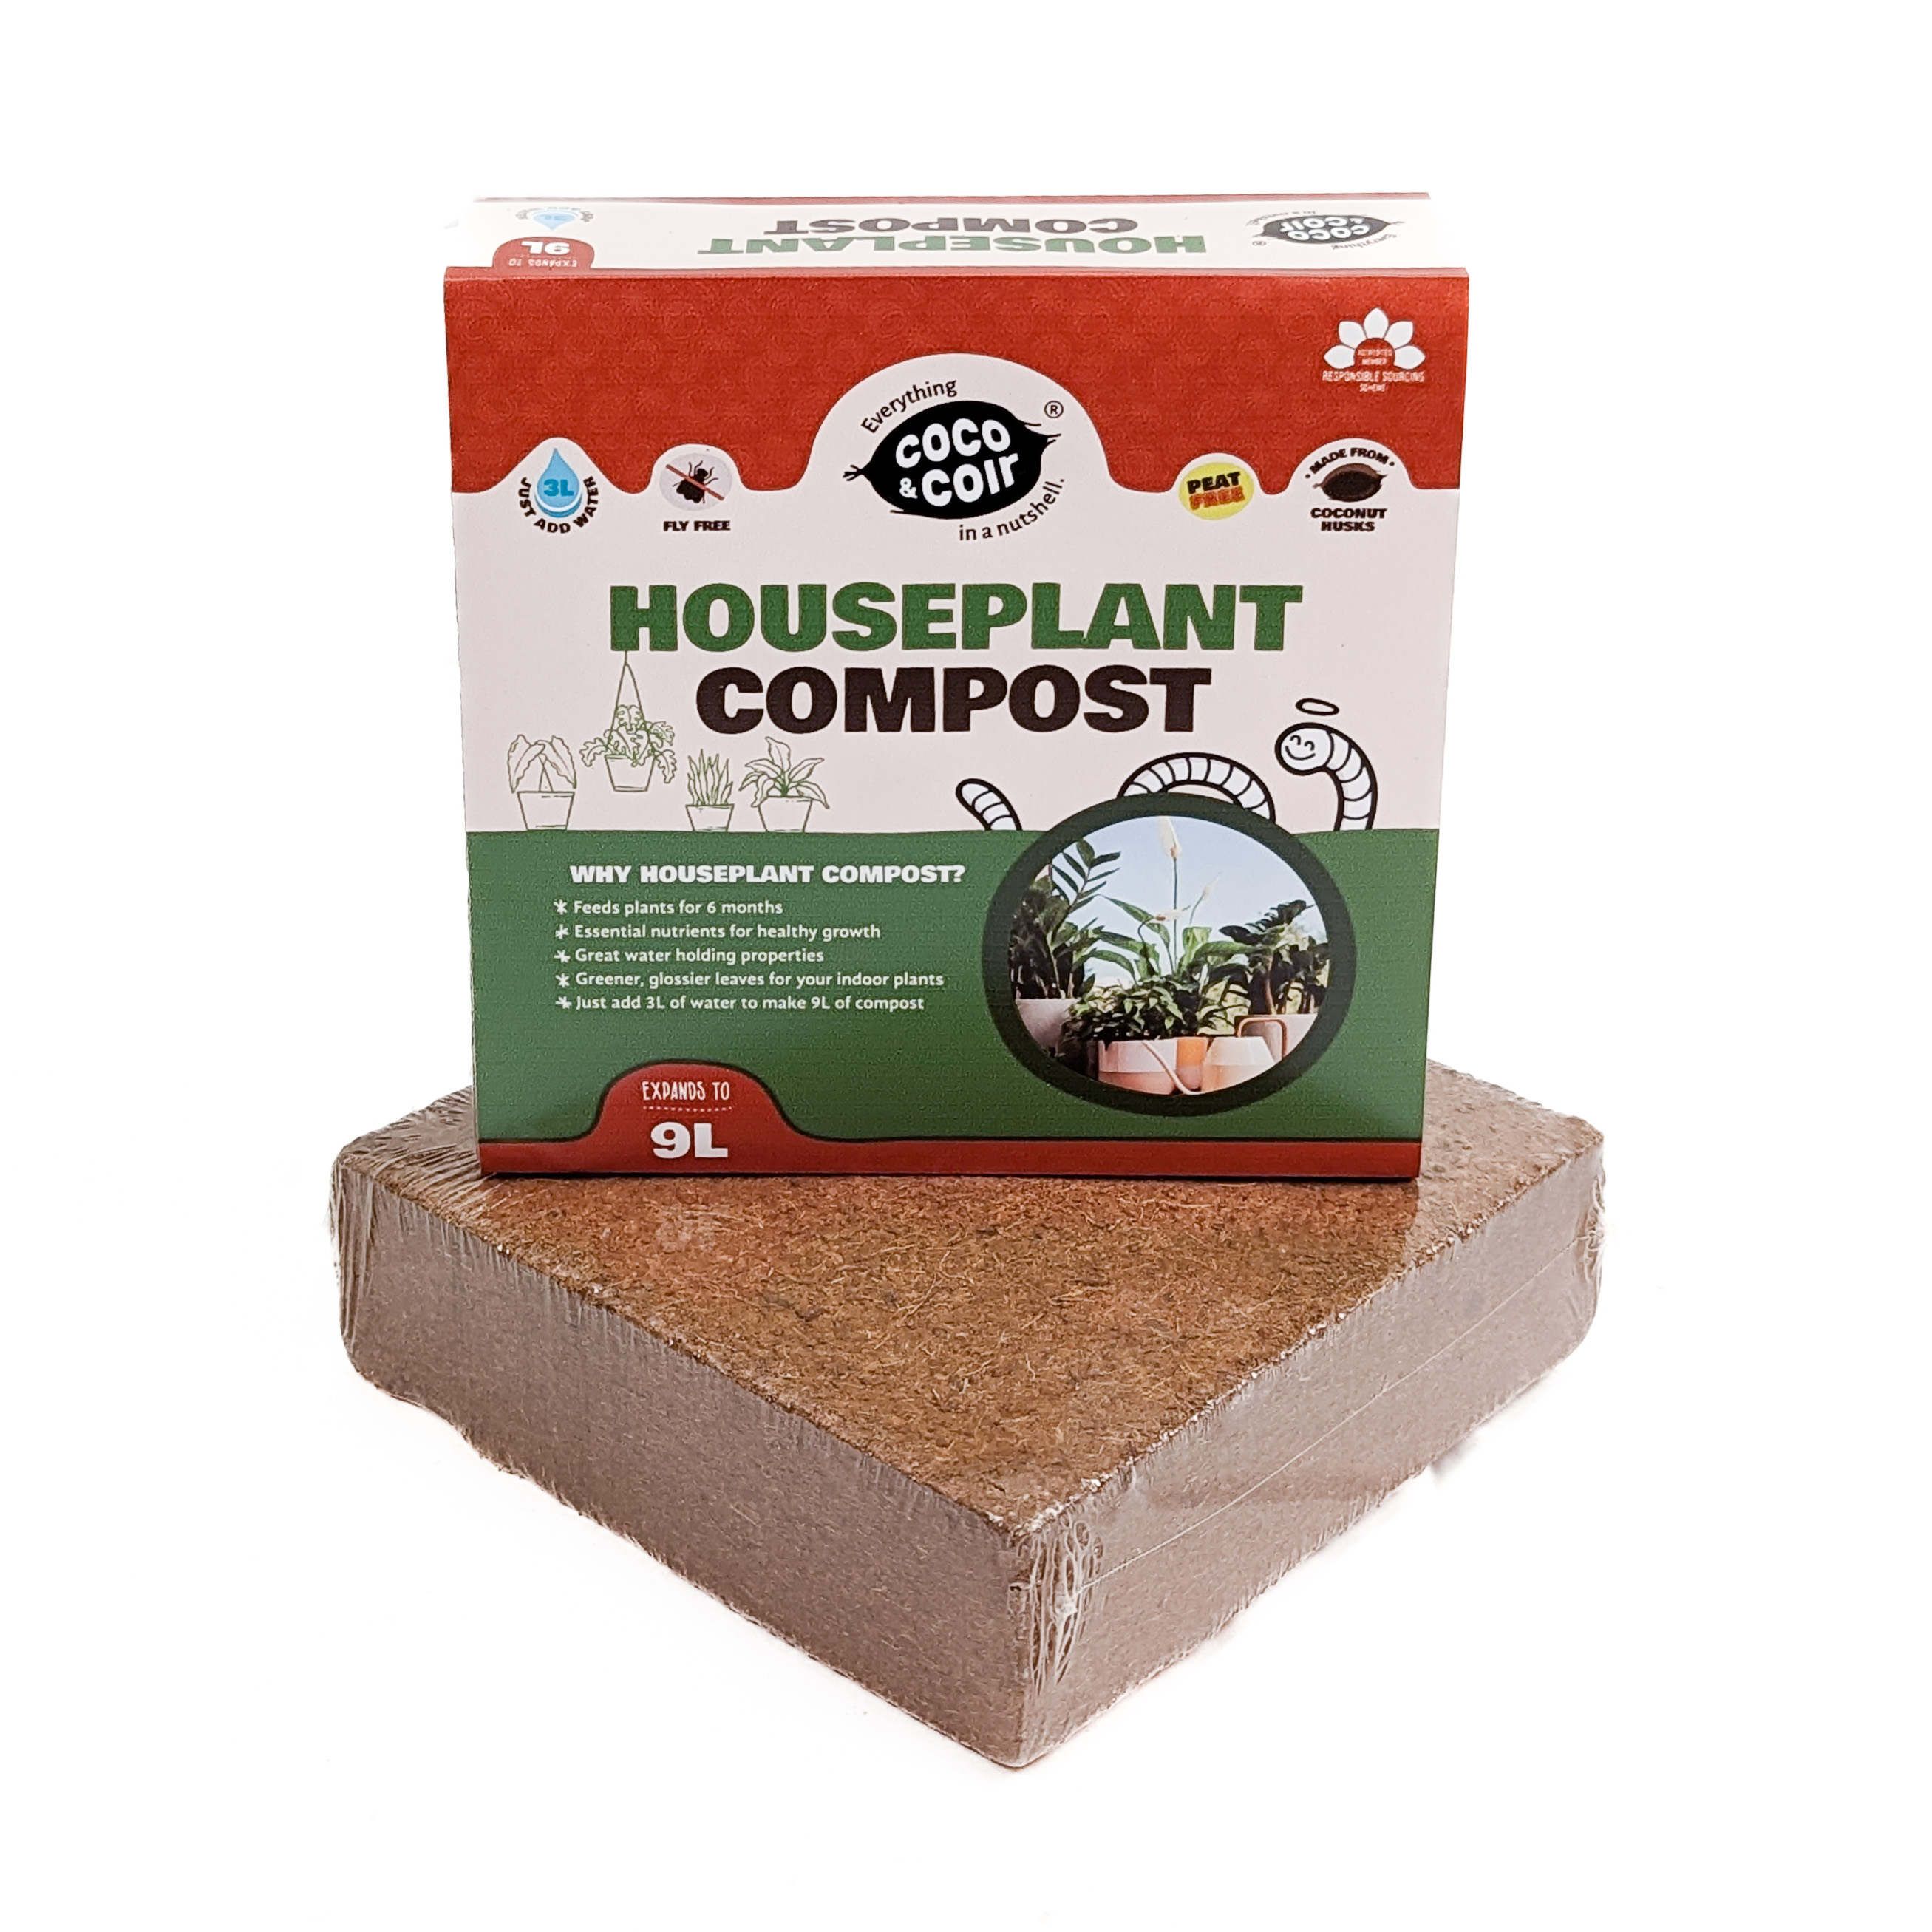 Houseplant Compost - 9L